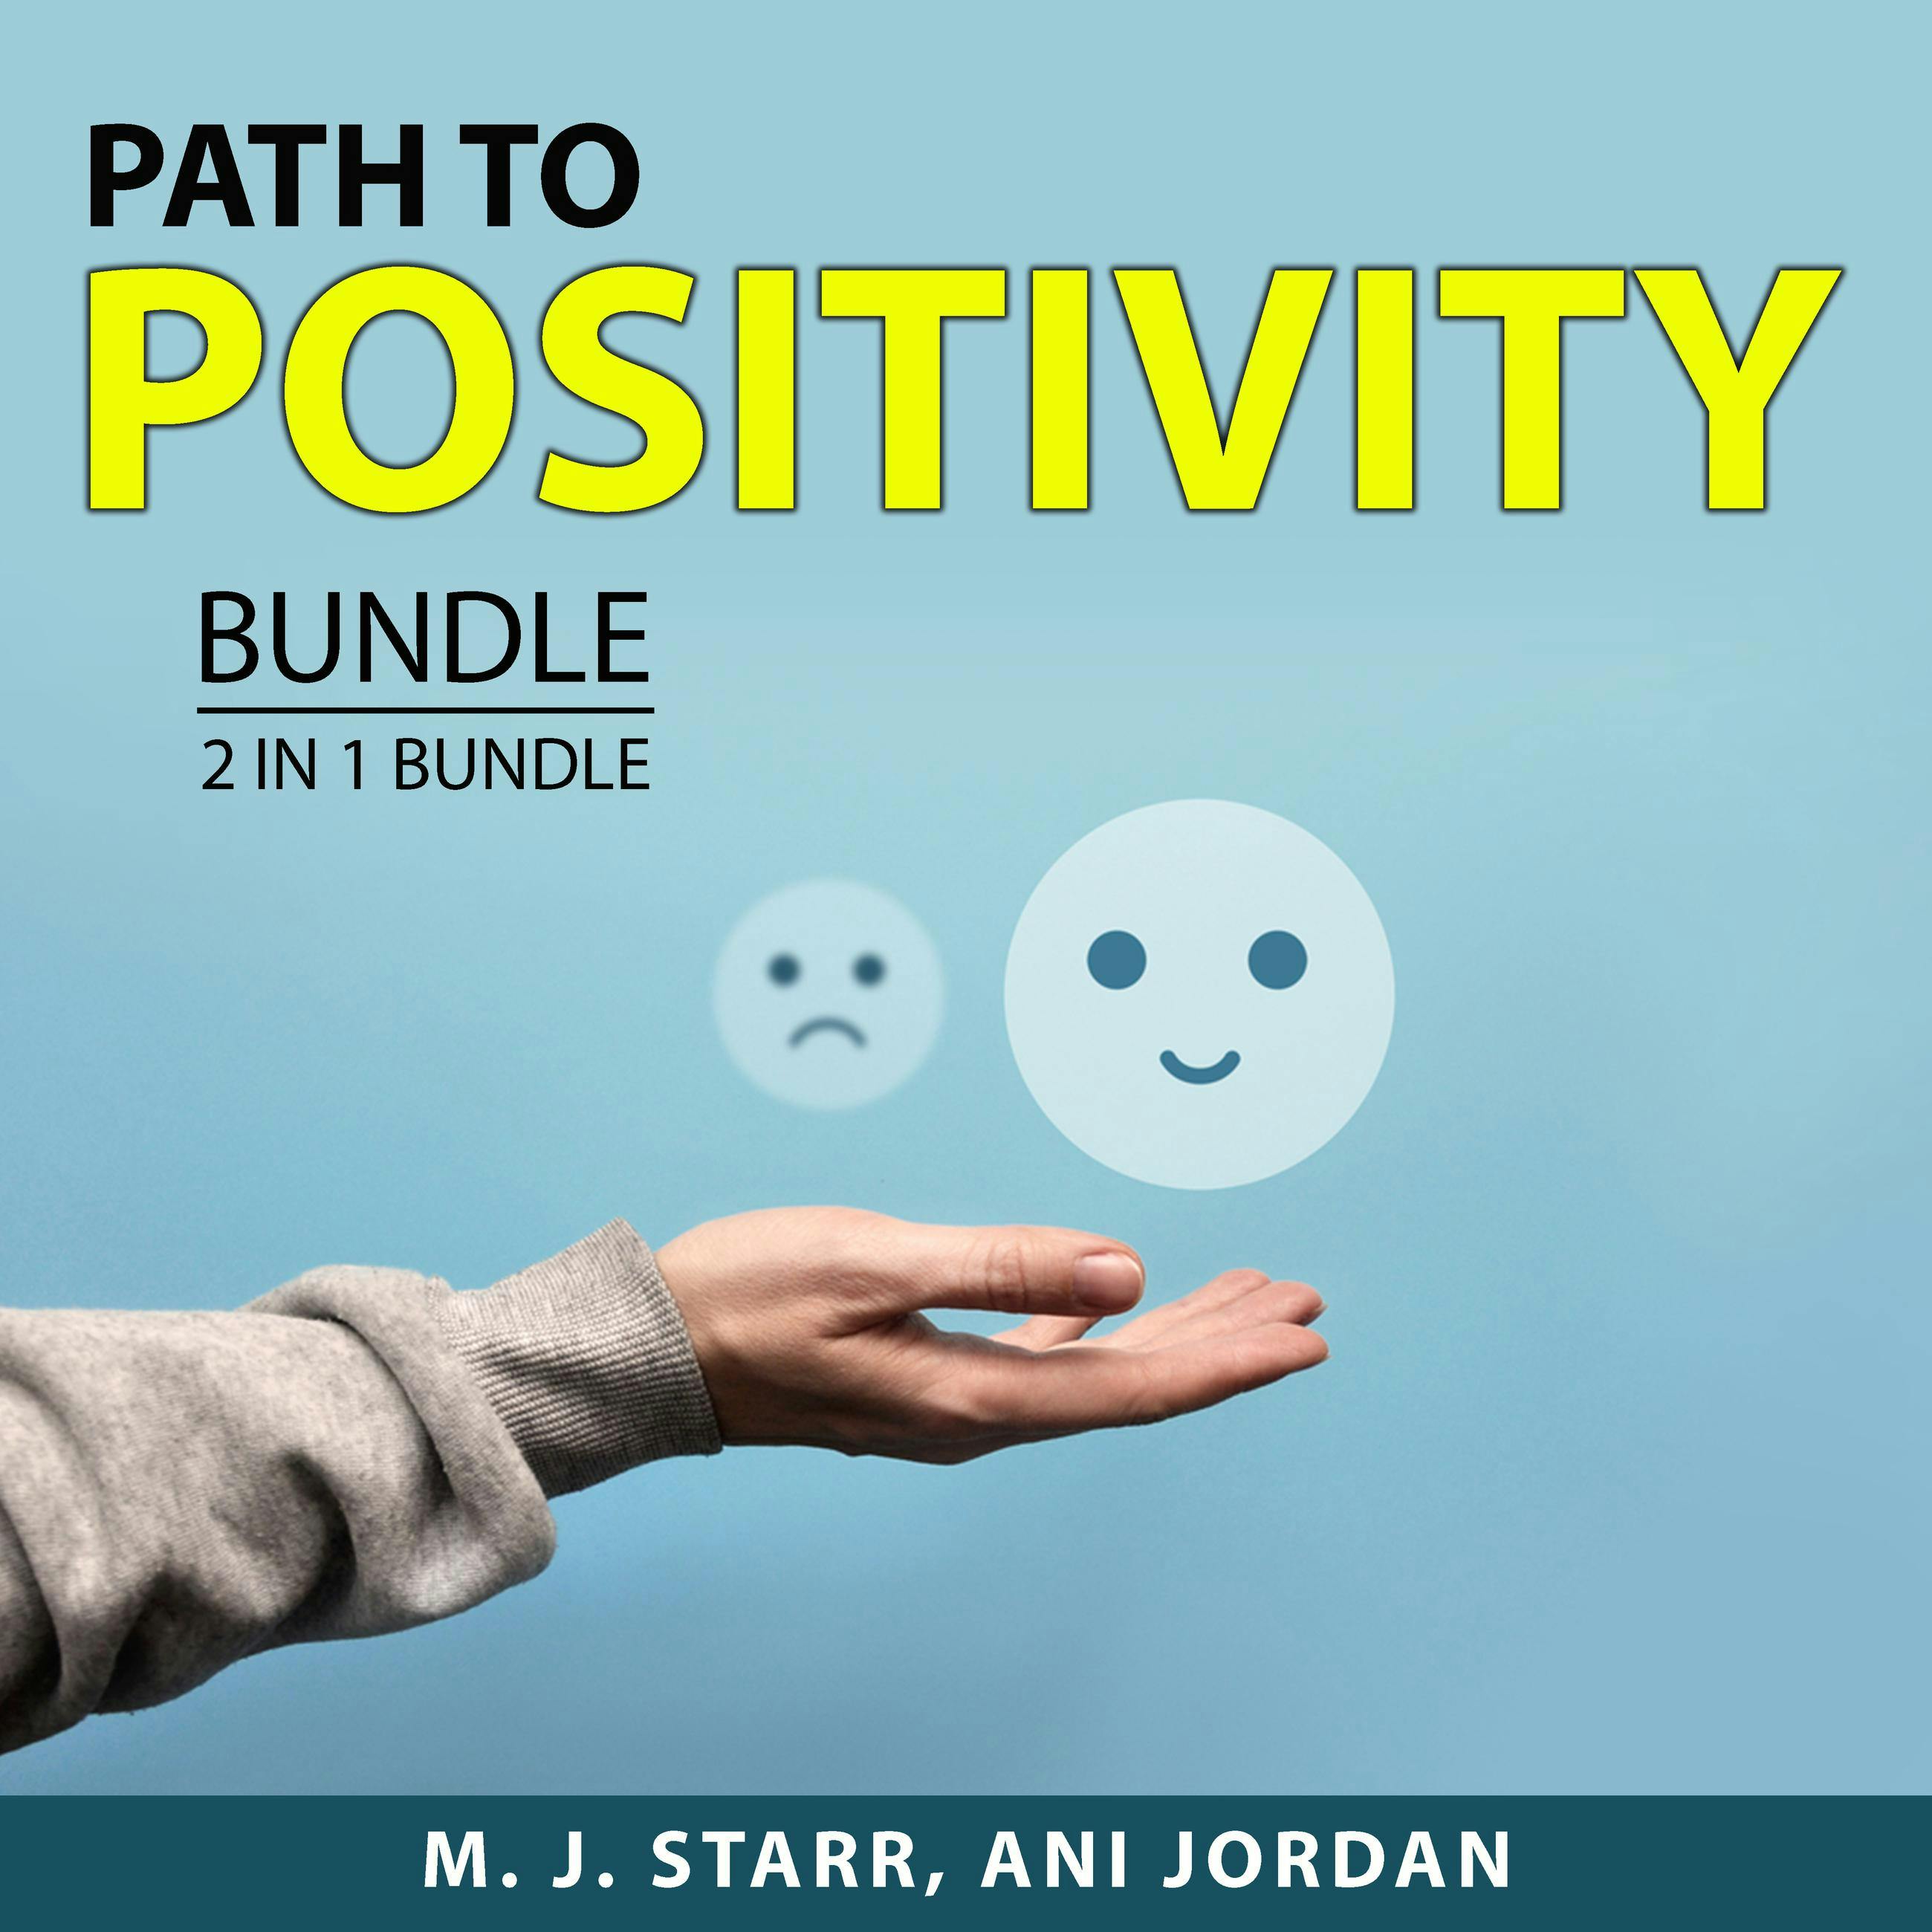 Path to Positivity Bundle, 2 in 1 Bundle: Positive Thinking and Self Help - Ani Jordan, M. J. Starr